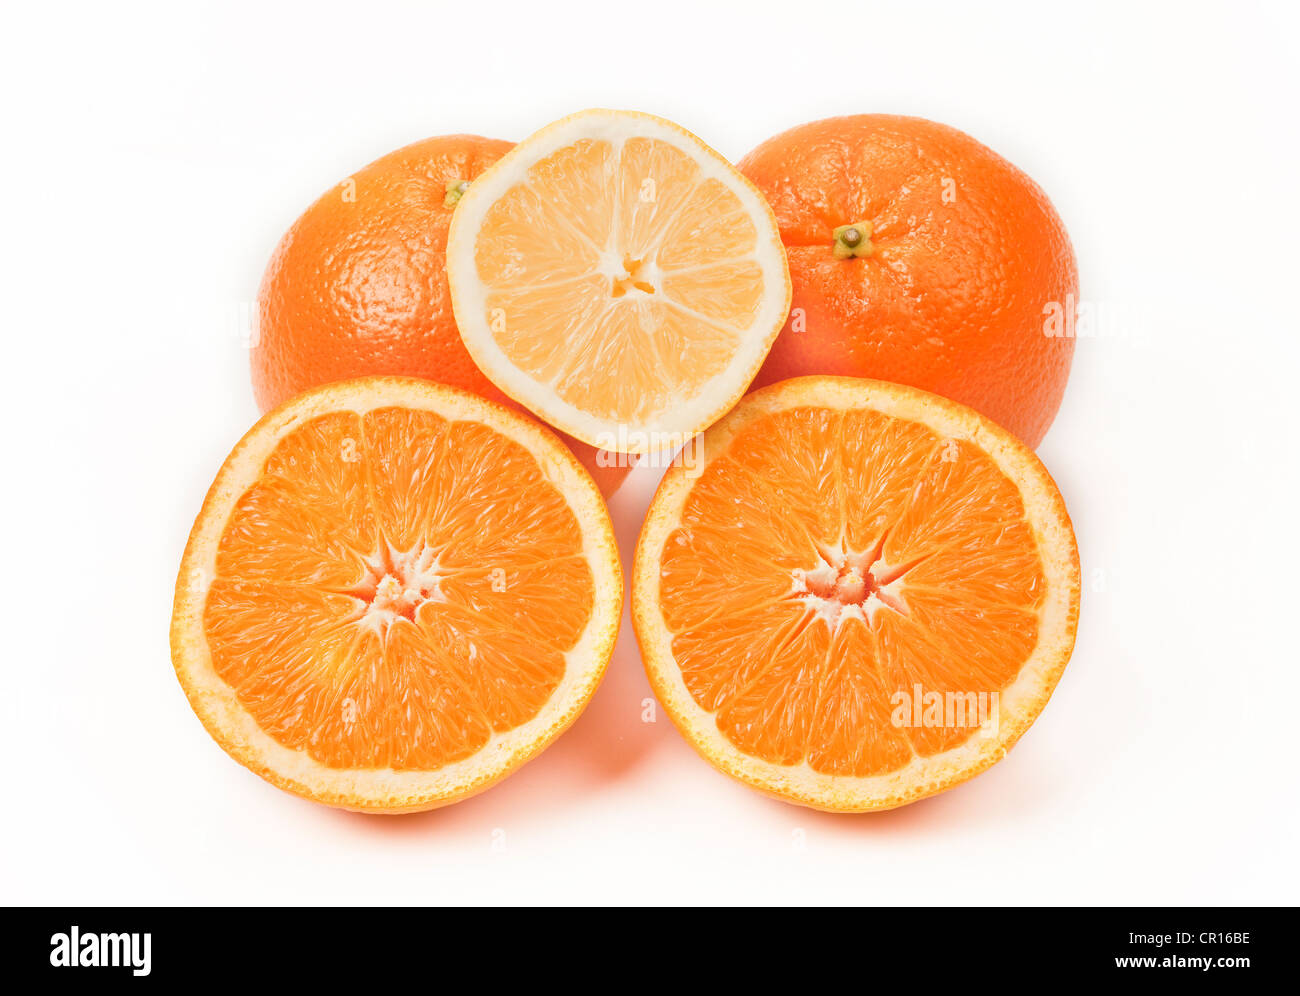 Fresh sliced oranges and a half lemon Stock Photo